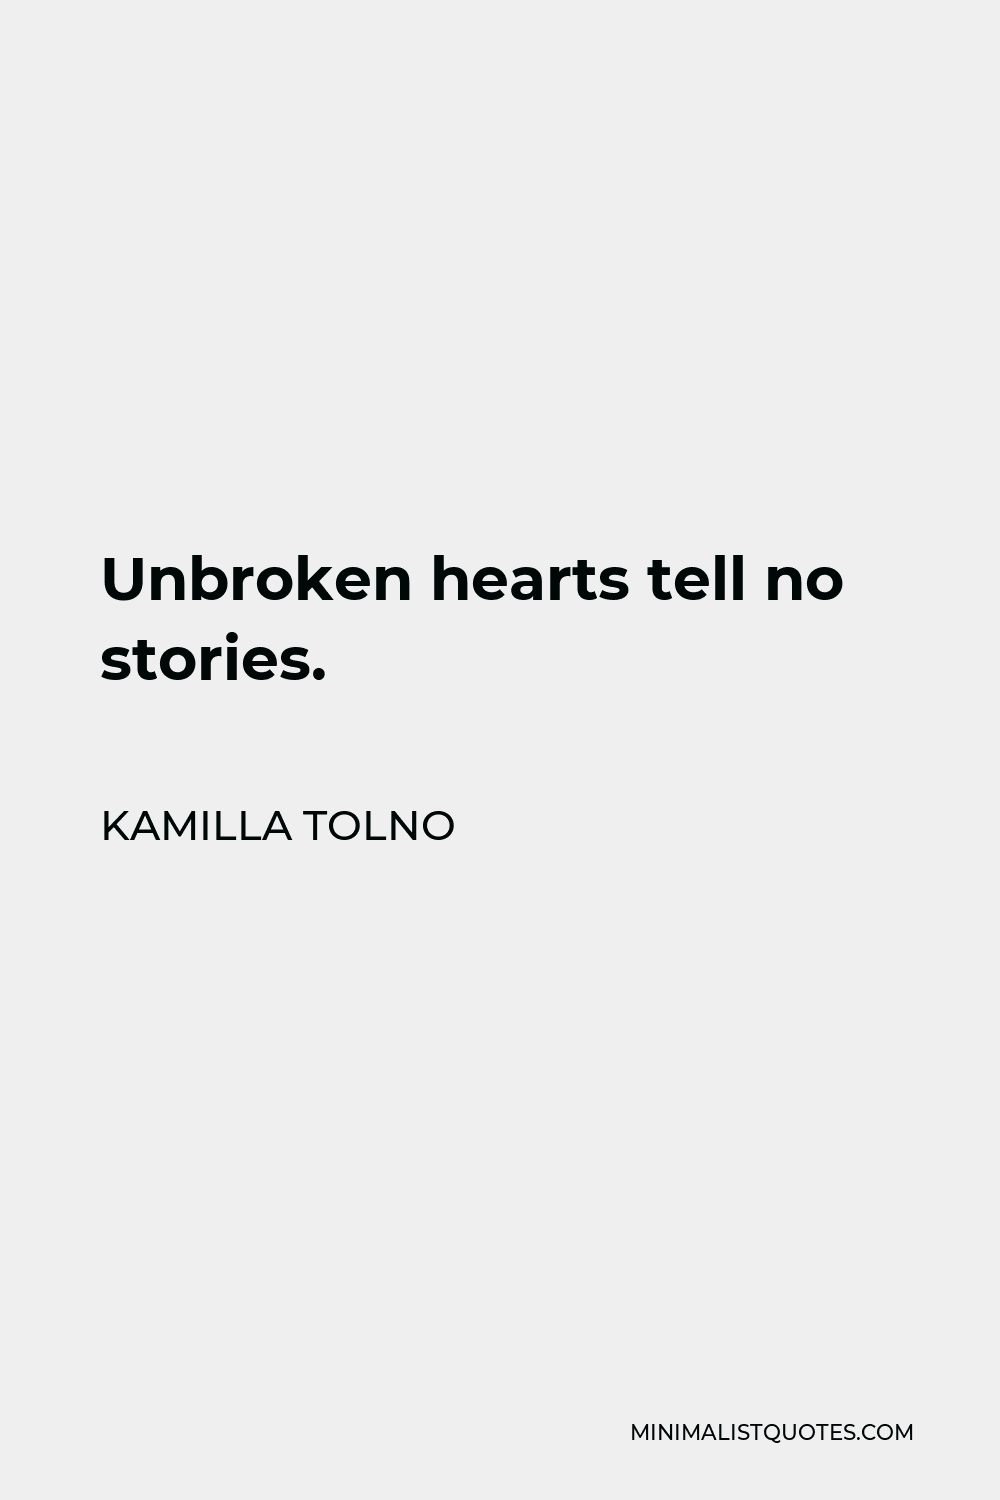 Kamilla Tolno Quote - Unbroken hearts tell no stories.